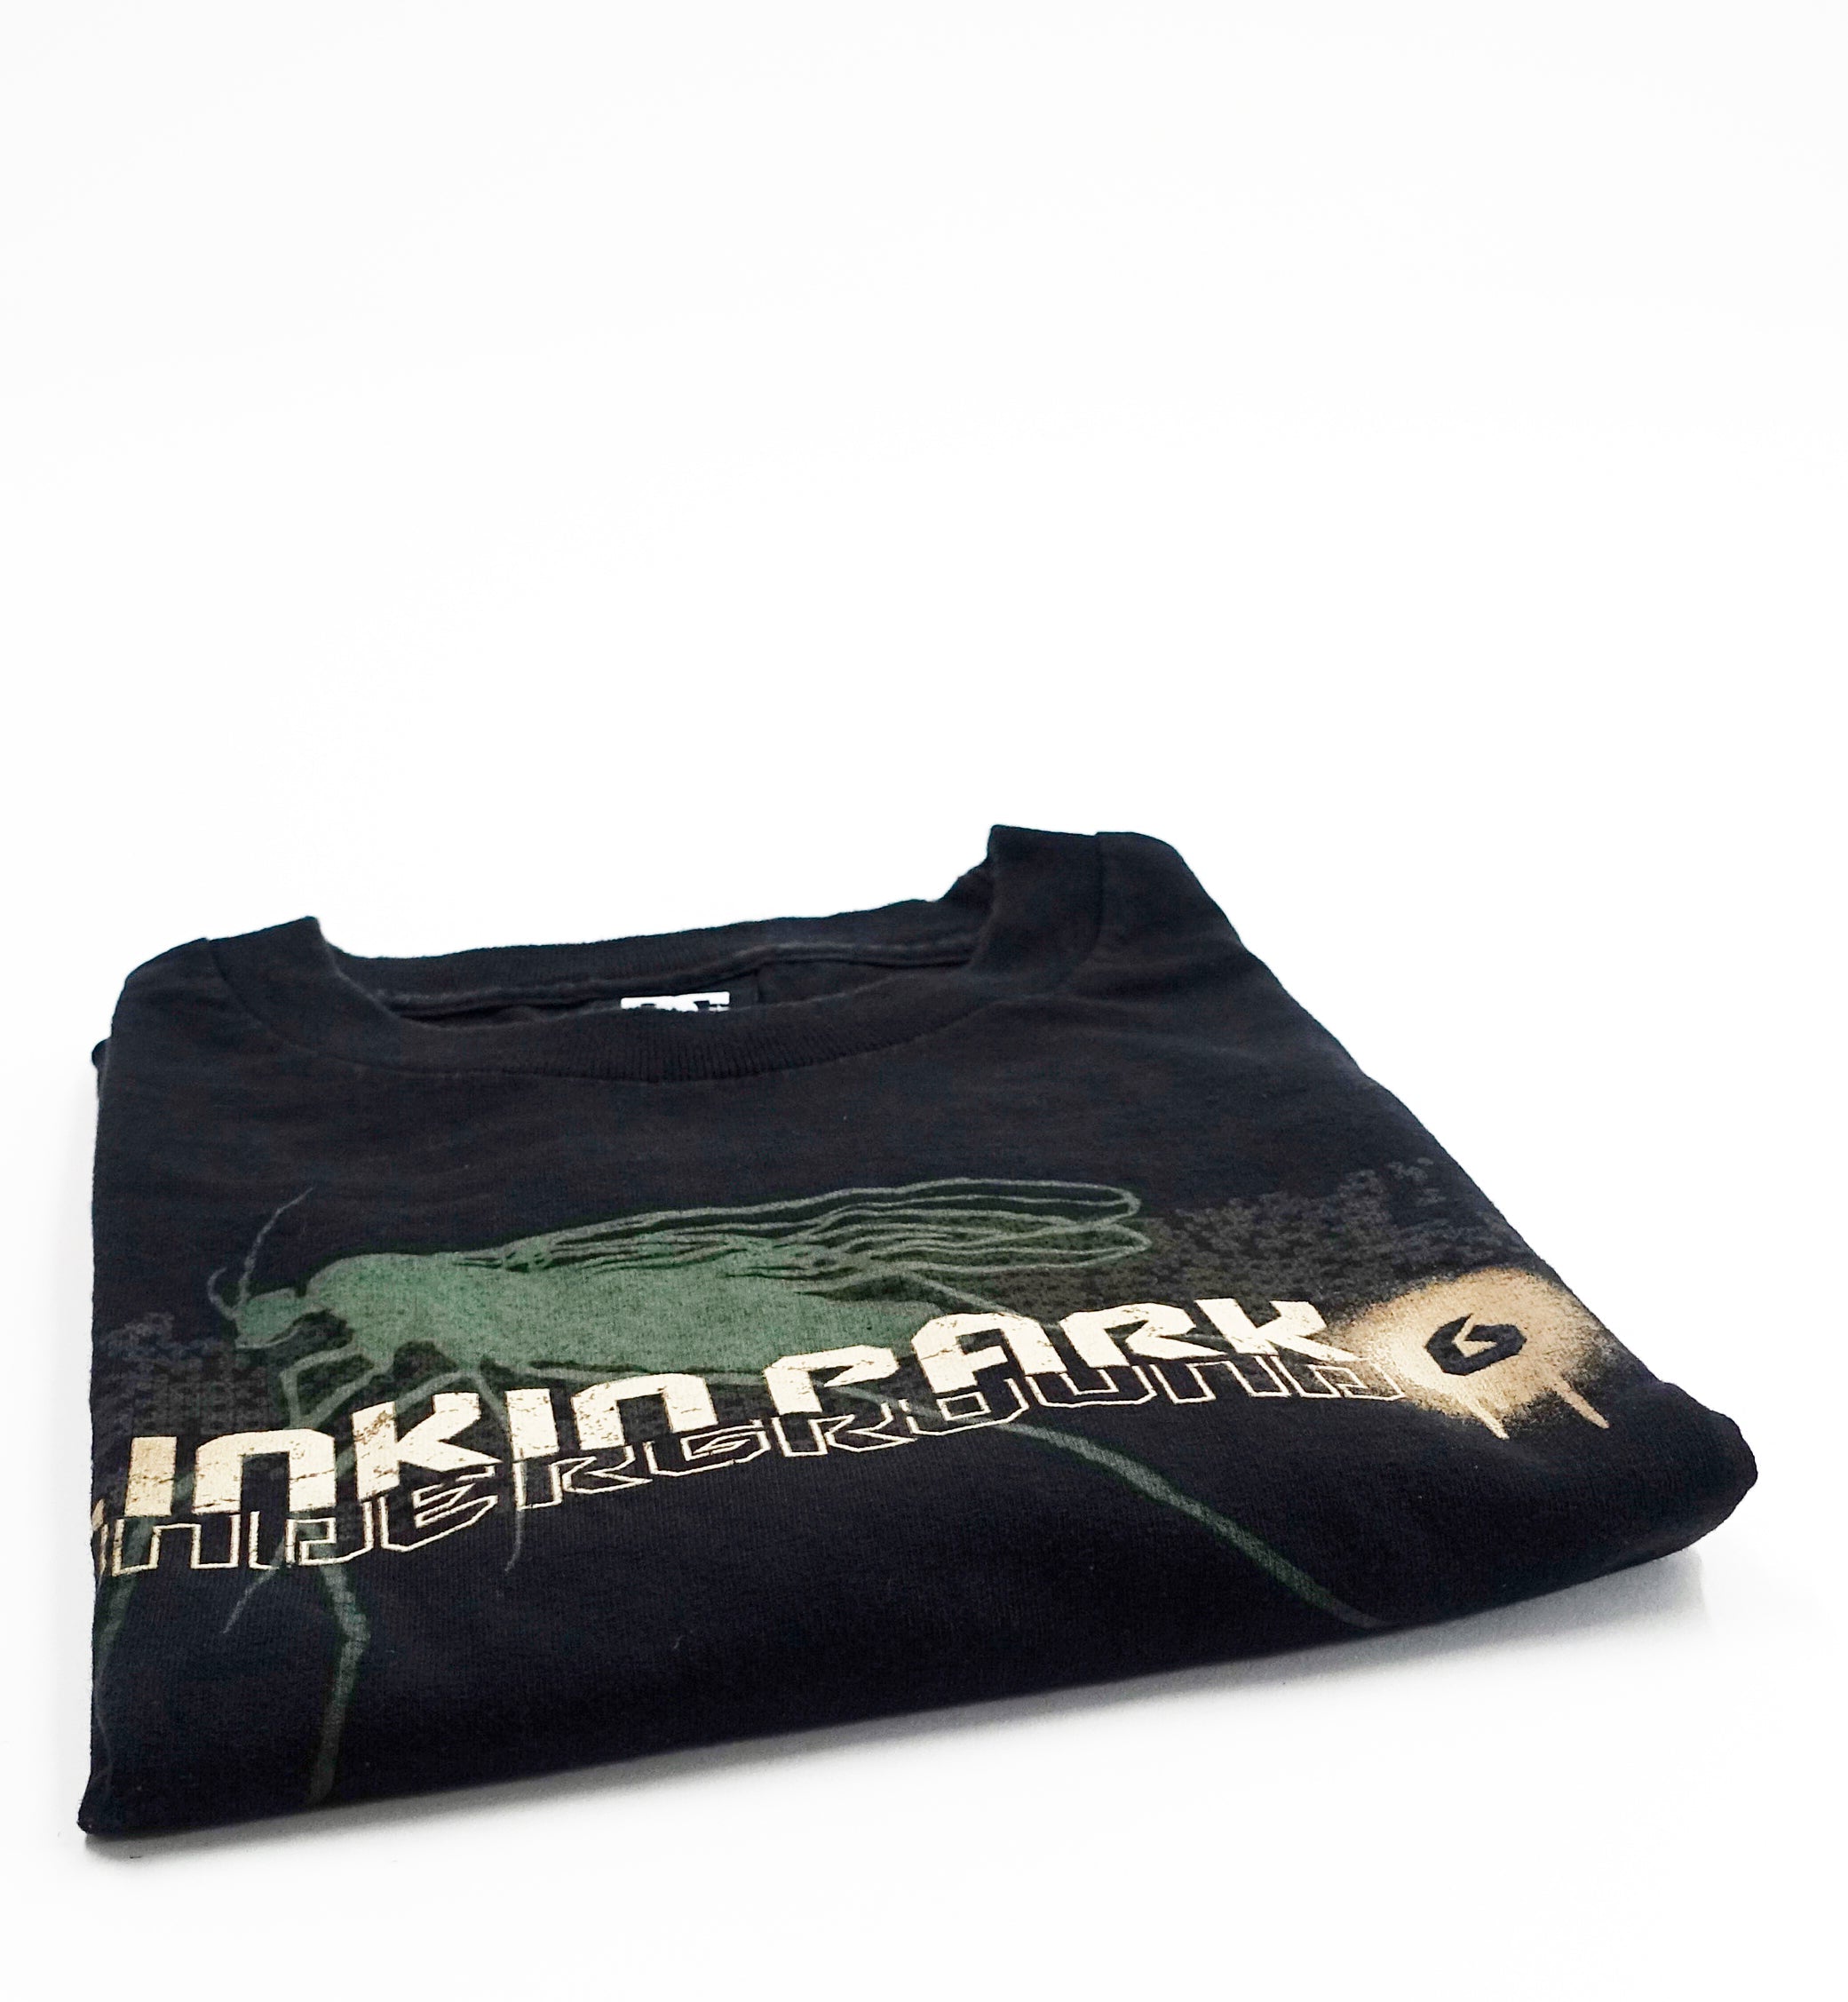 Linkin Park - Underground DC 2003 Promo Tour Shirt Size XL